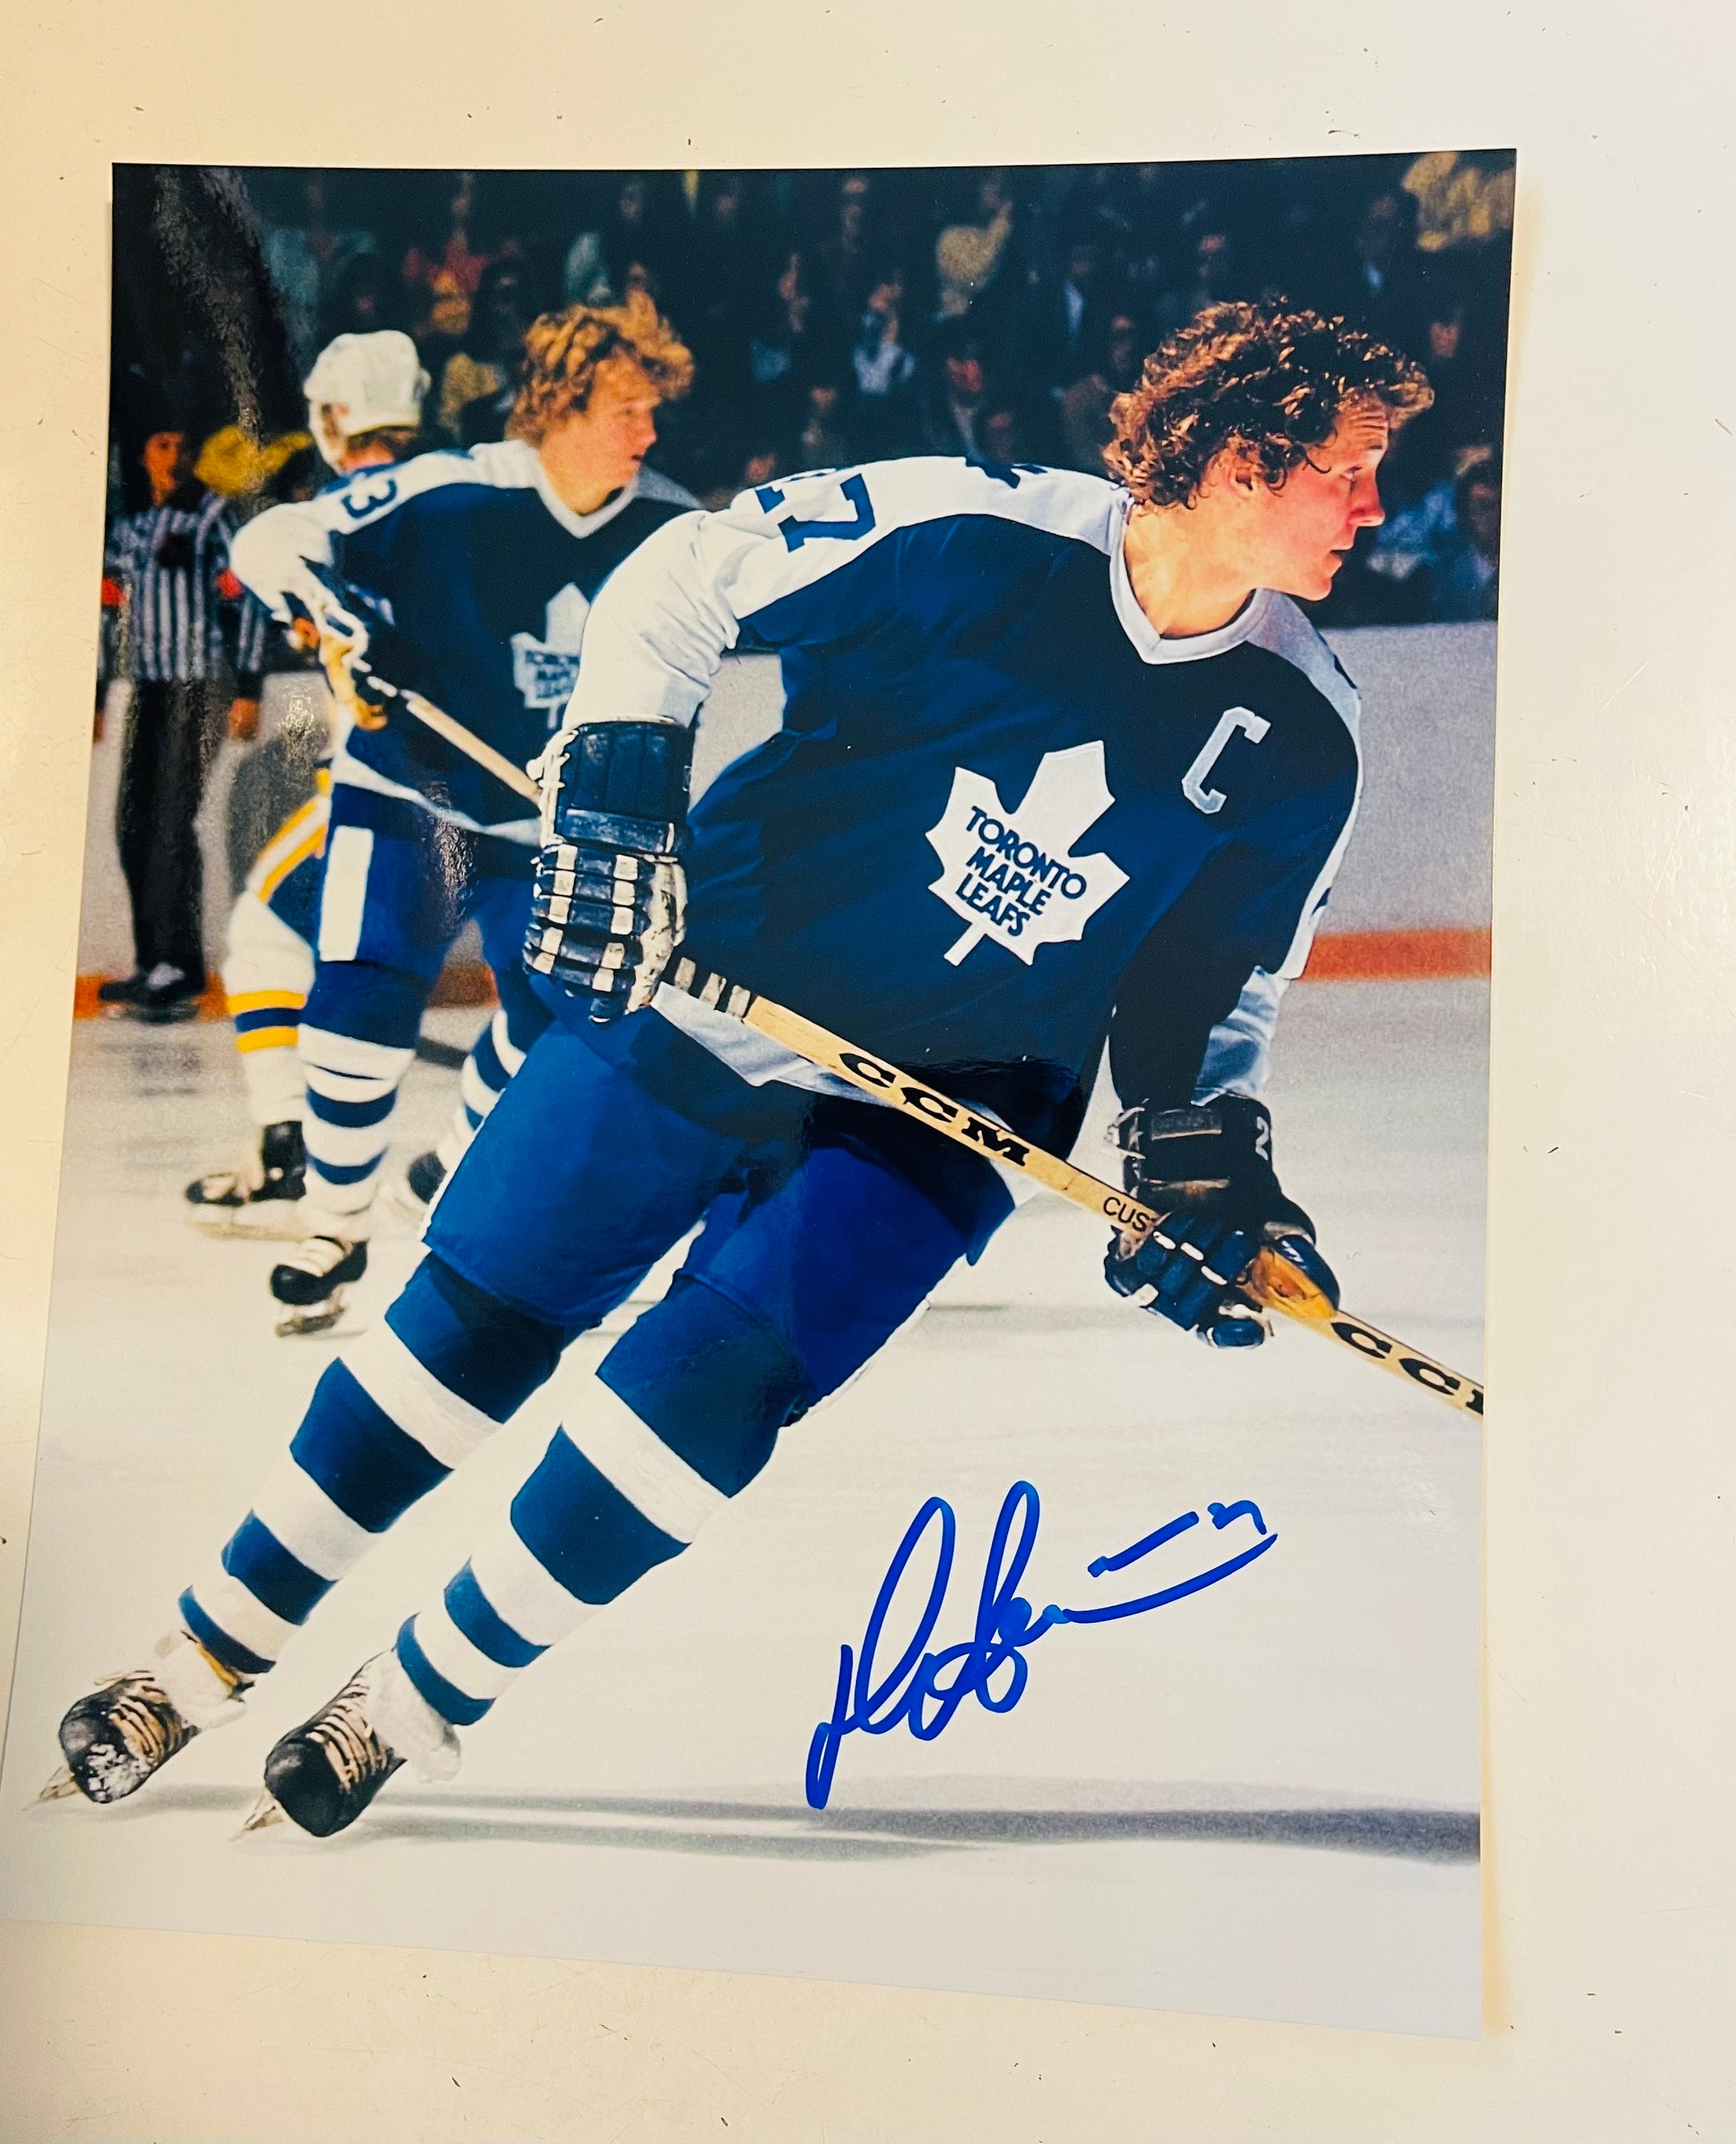 Mats Sundin Signed c. 2000 Toronto Maple Leafs Jersey Autograph Auto